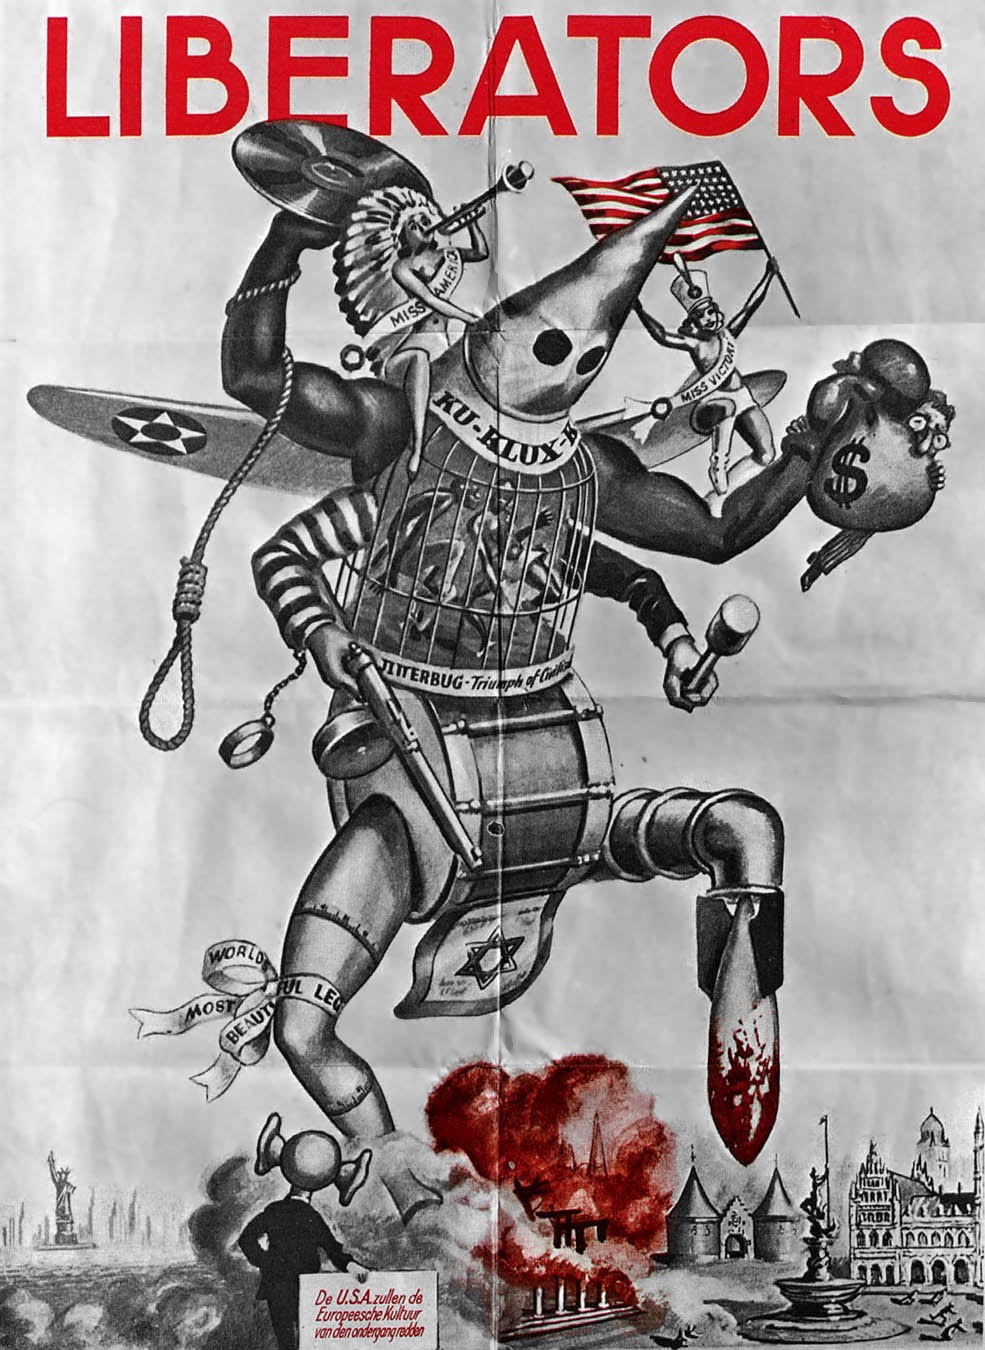 Liberators-Kultur-Terror-Anti-Americanism-1944-Nazi-Propaganda-Poster.jpg